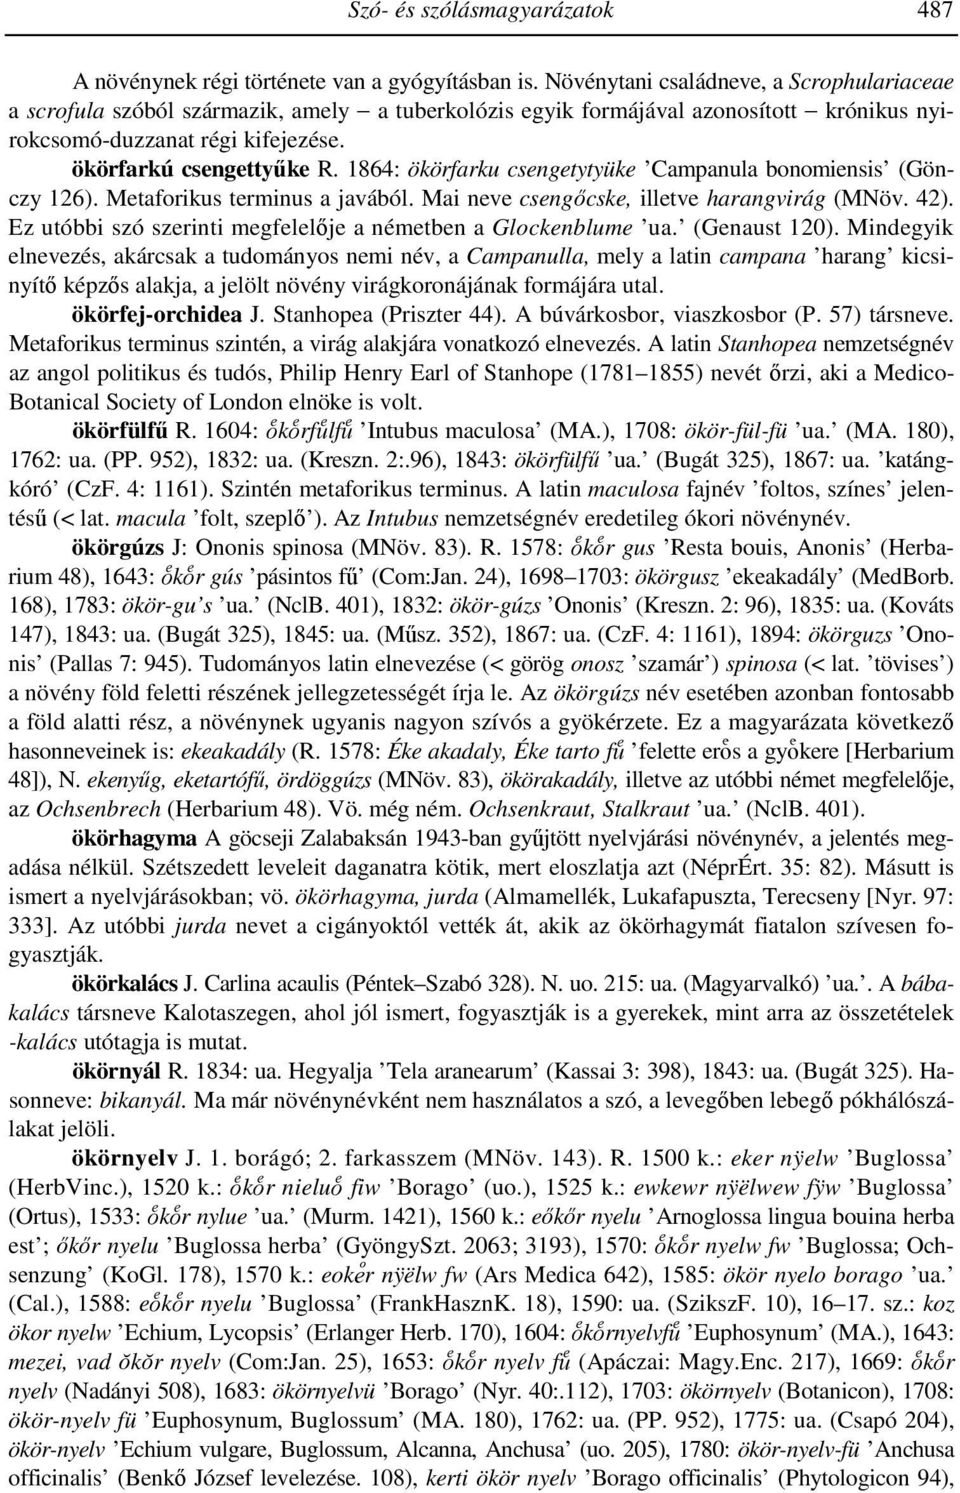 1864: ökörfarku csengetytyüke Campanula bonomiensis (Gönczy 126). Metaforikus terminus a javából. Mai neve csengıcske, illetve harangvirág (MNöv. 42).